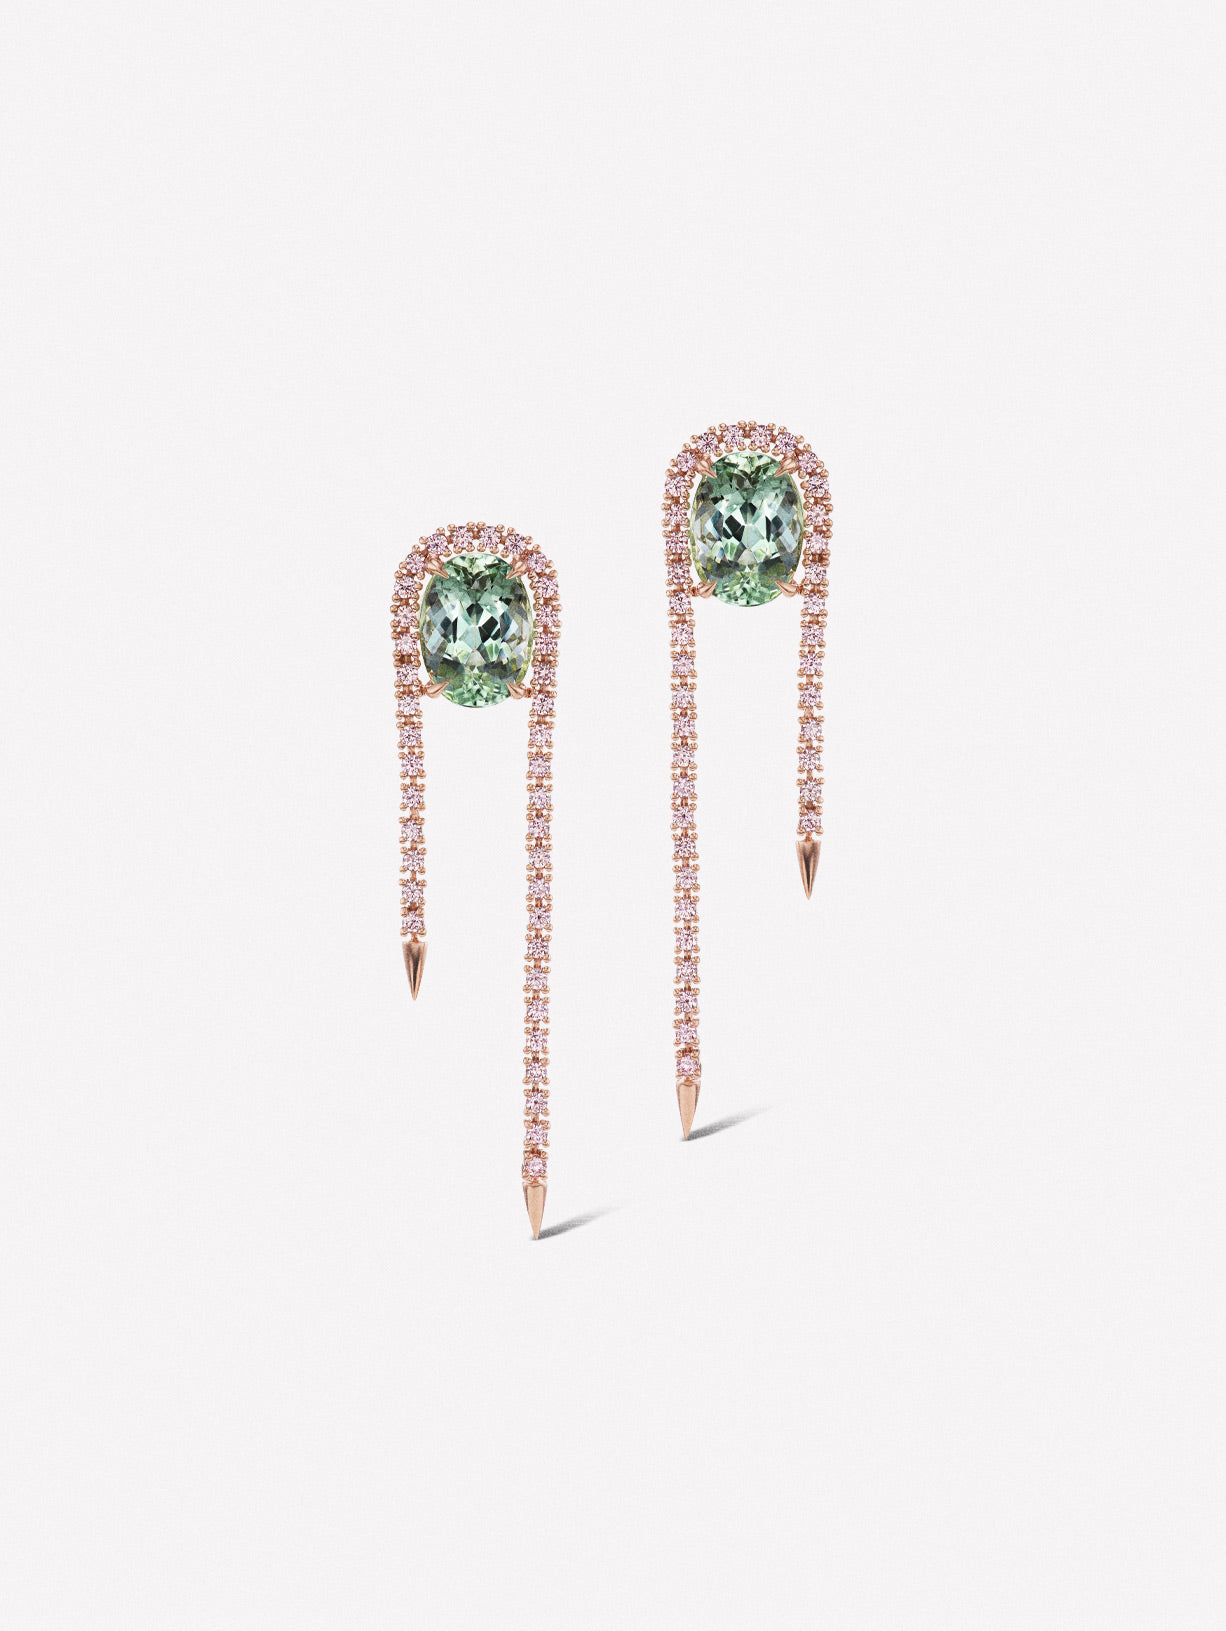 Argyle Pink™ Diamonds and Tourmaline Earrings - Pink Diamonds, J FINE - J Fine, Earrings - Pink Diamond Jewelry, argyle-pink™-diamonds-and-mixed-tourmaline-earrings-by-j-fine - Argyle Pin